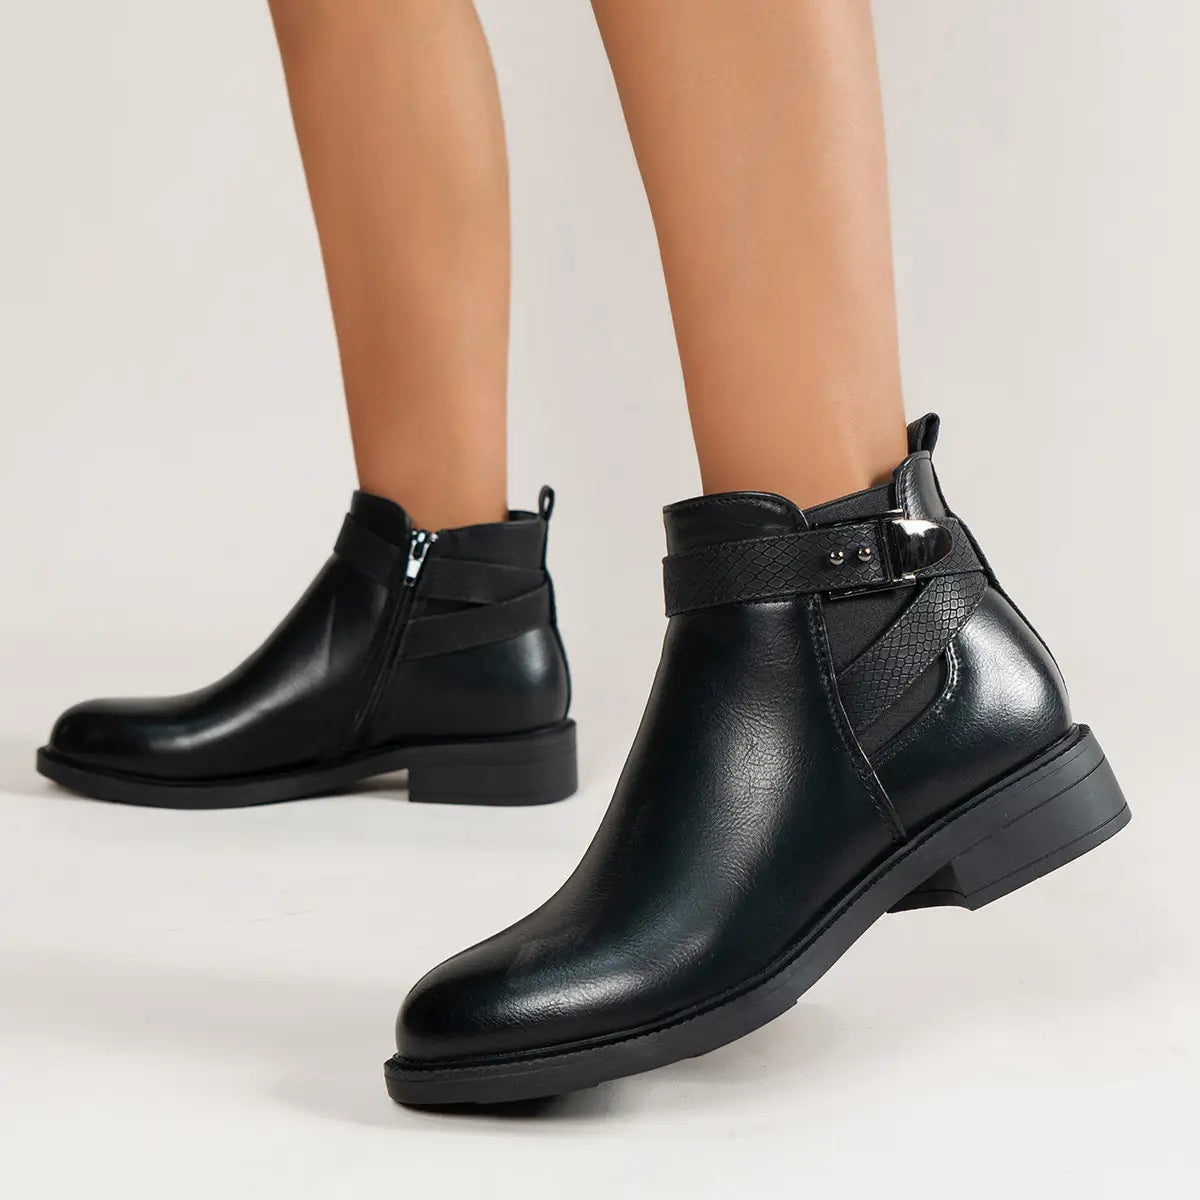 Chelsea Boots Women Black Ankle Boots Side Zipper Buckle